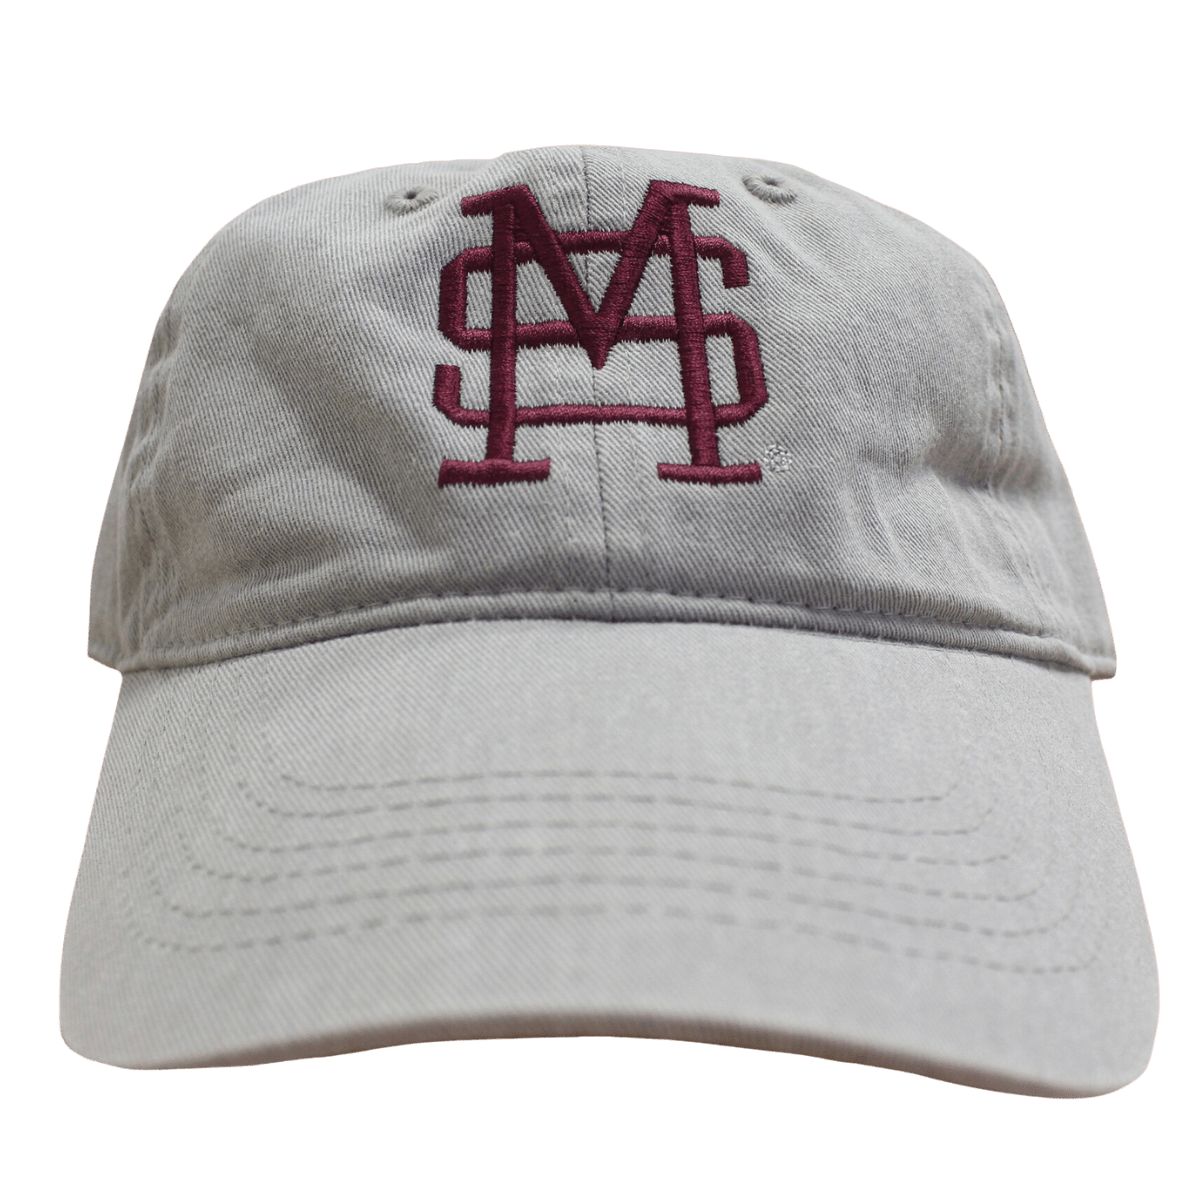 Mississippi State University Baseball Hat - Shop B-Unlimited